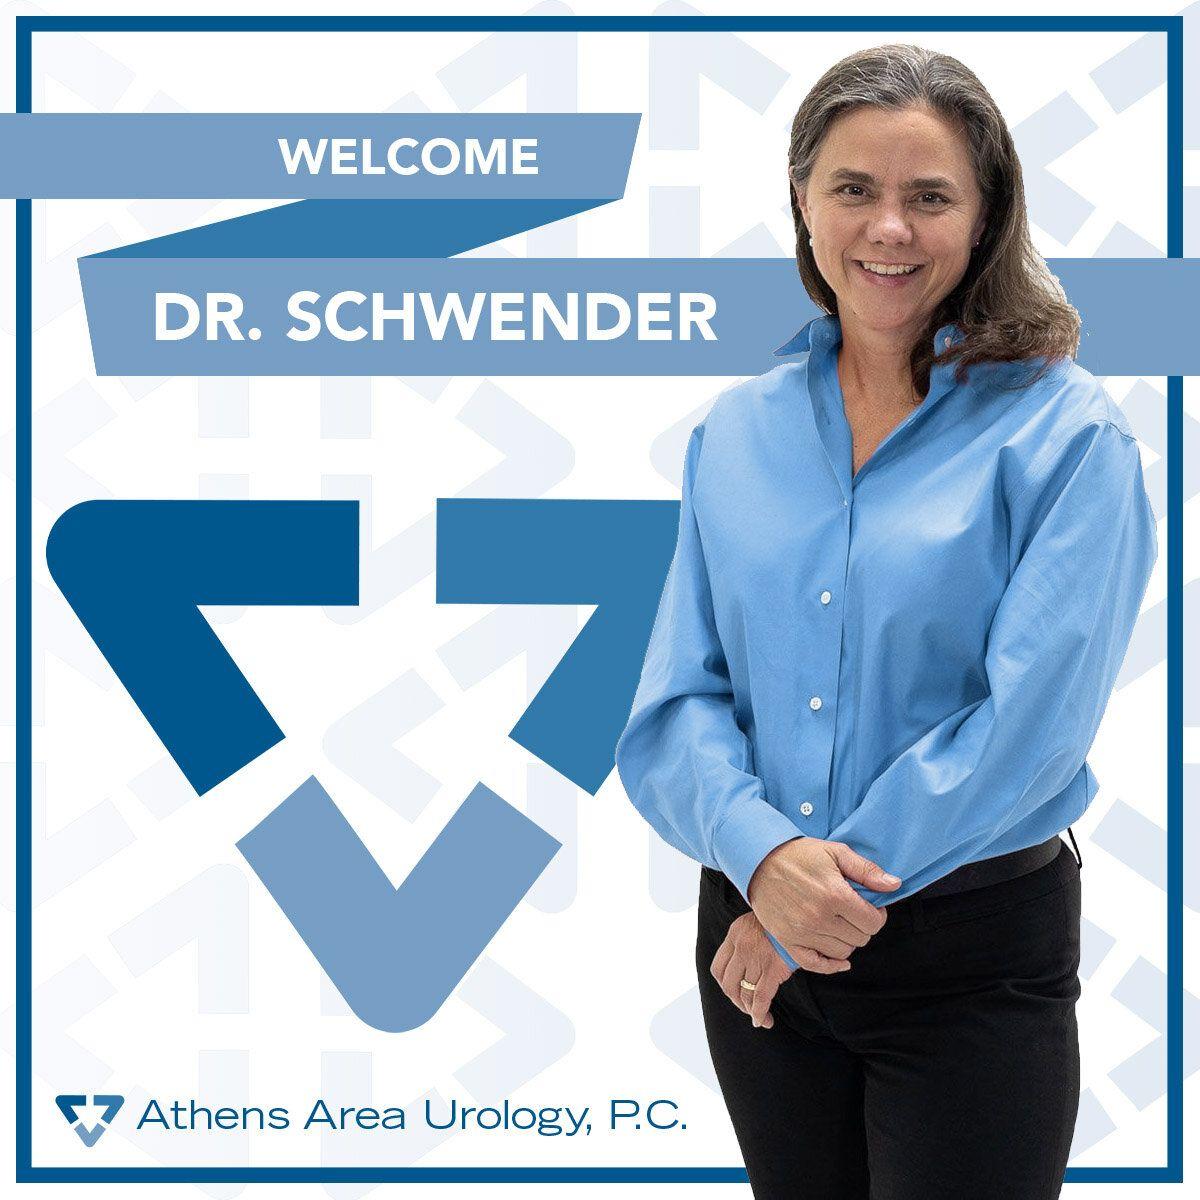 Introducing Dr. Schwender